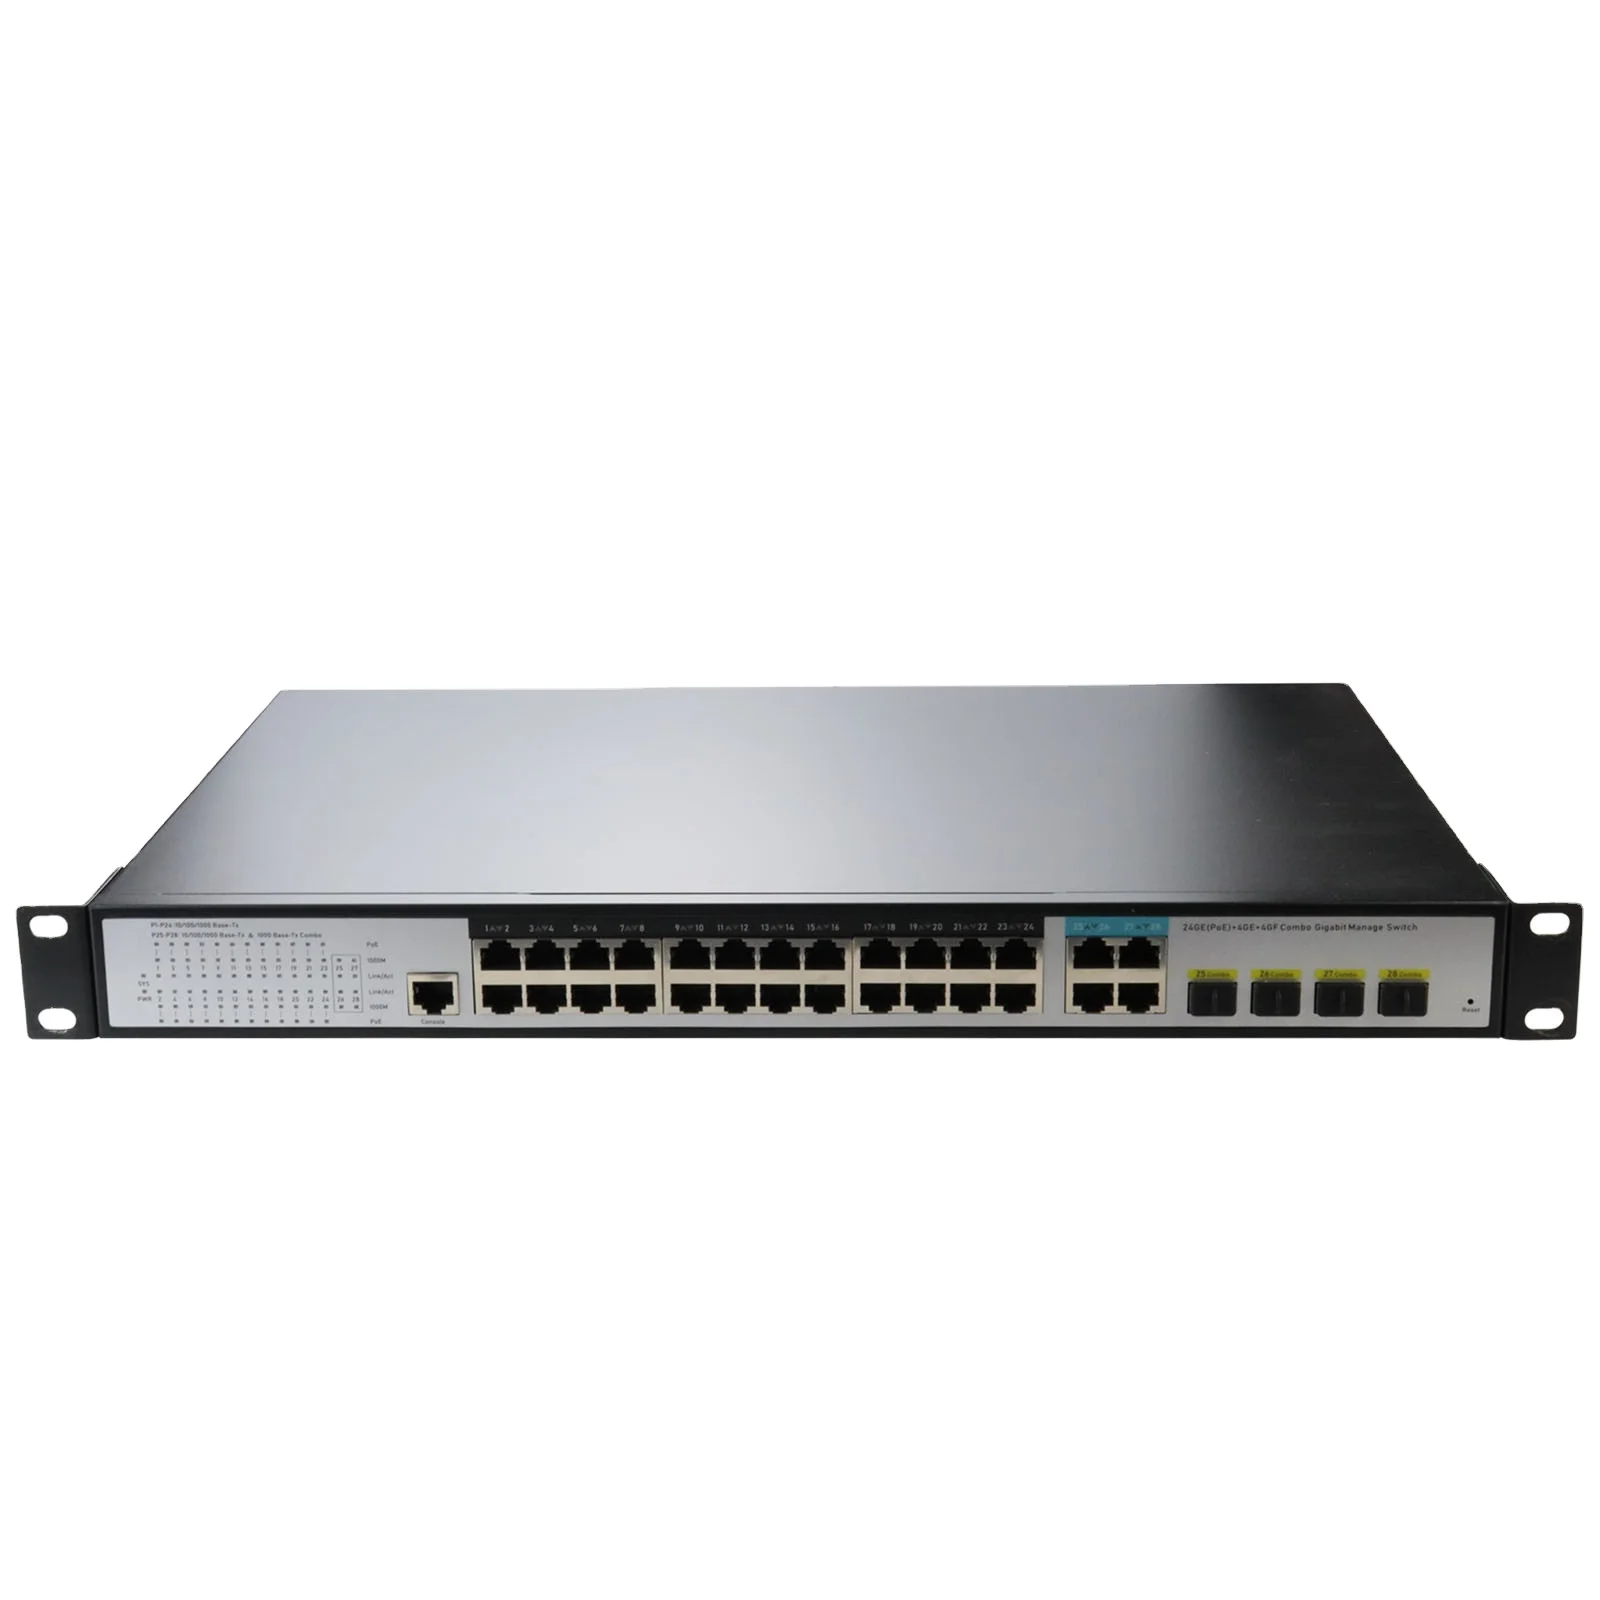 

Commercial L2+ 24-Port 10 100 1000T Gigabit To 4-Port Gigabit TP/SFP Combo Managed Ethernet Switch